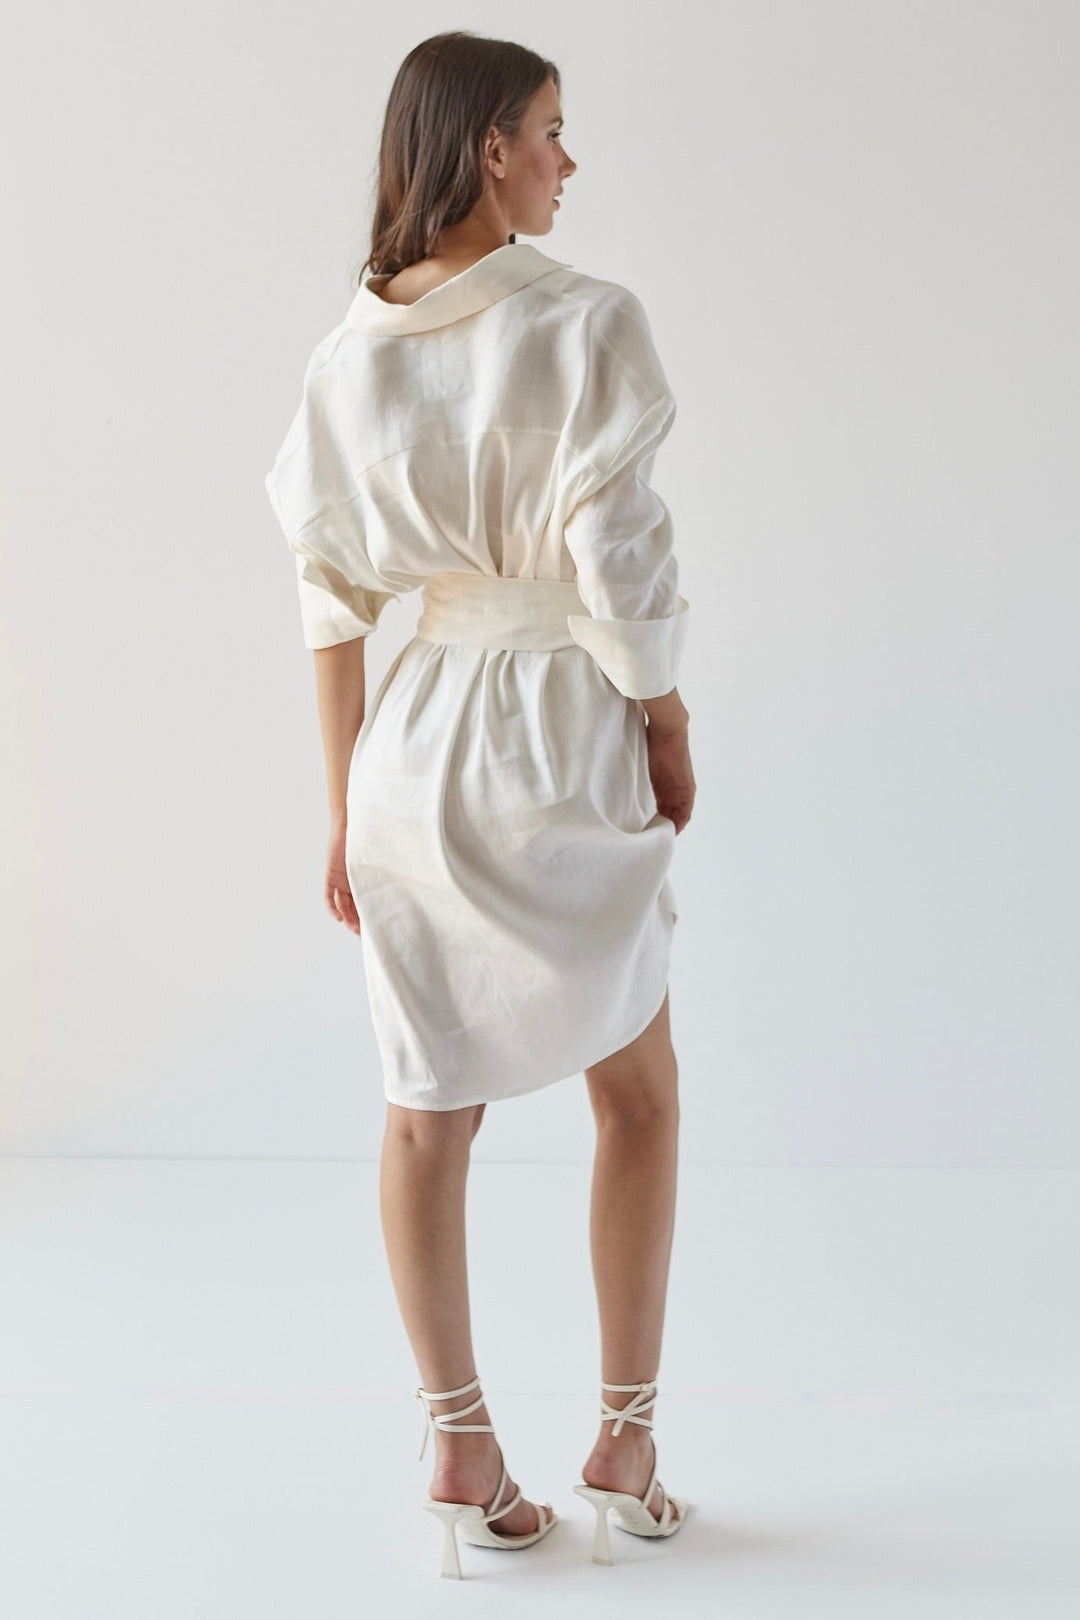 Adroit Atelier Kyoko Pullover Dress - Off White